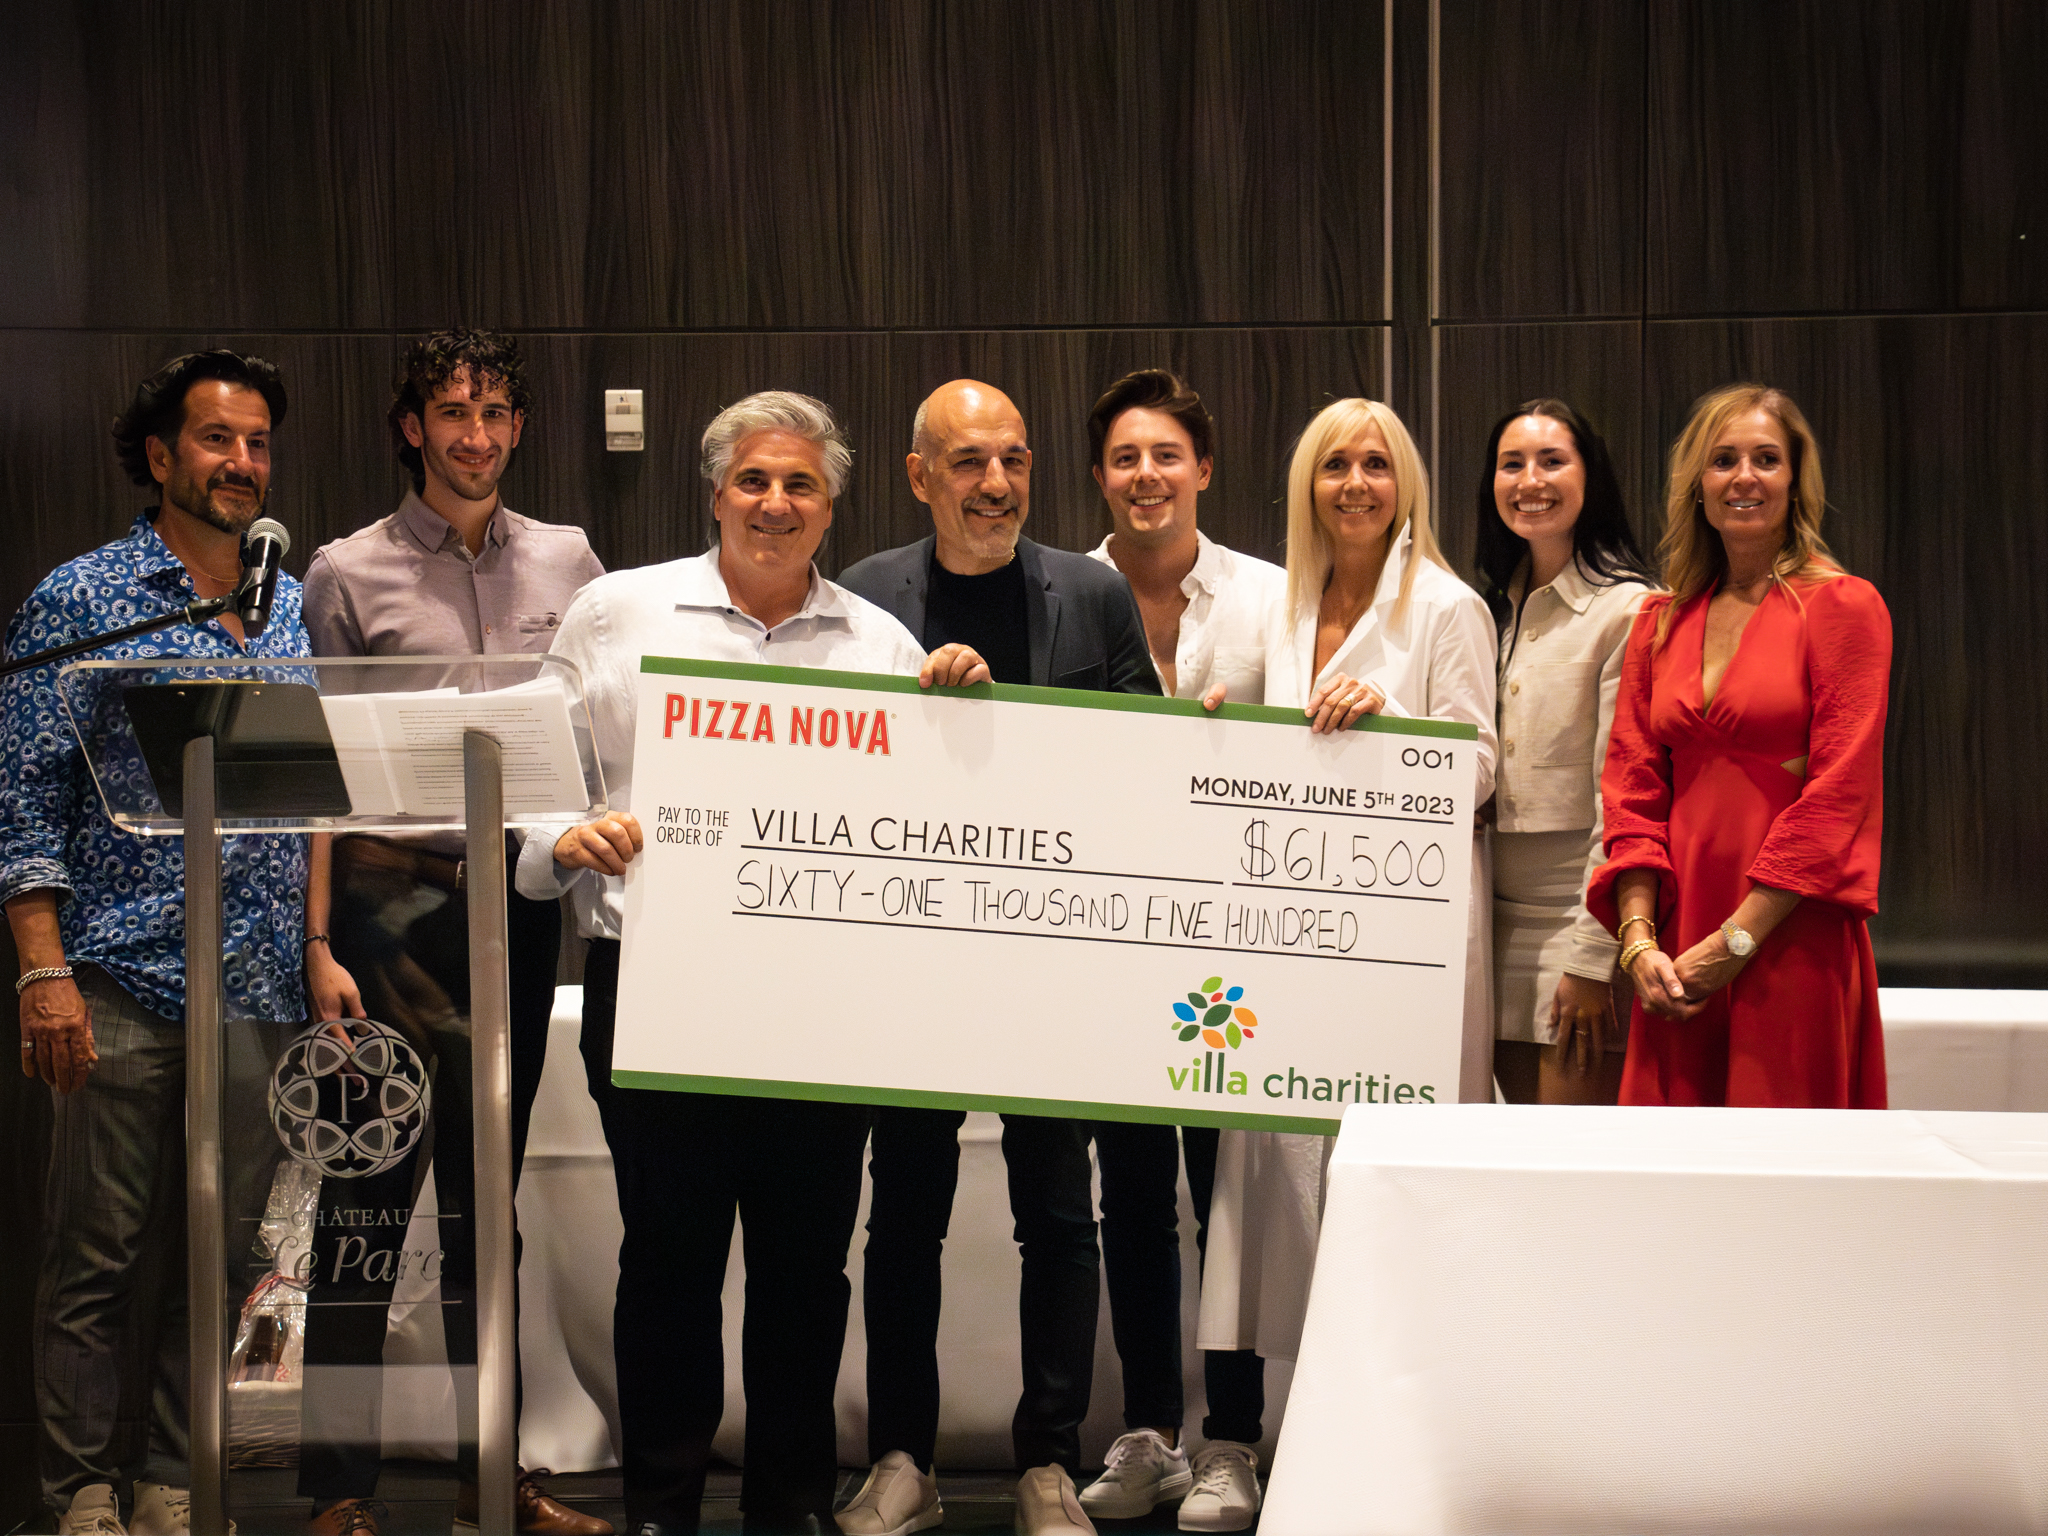 Pizza Nova raises $61,500 in support of Villa Charities at 26th annual golf fundraiser